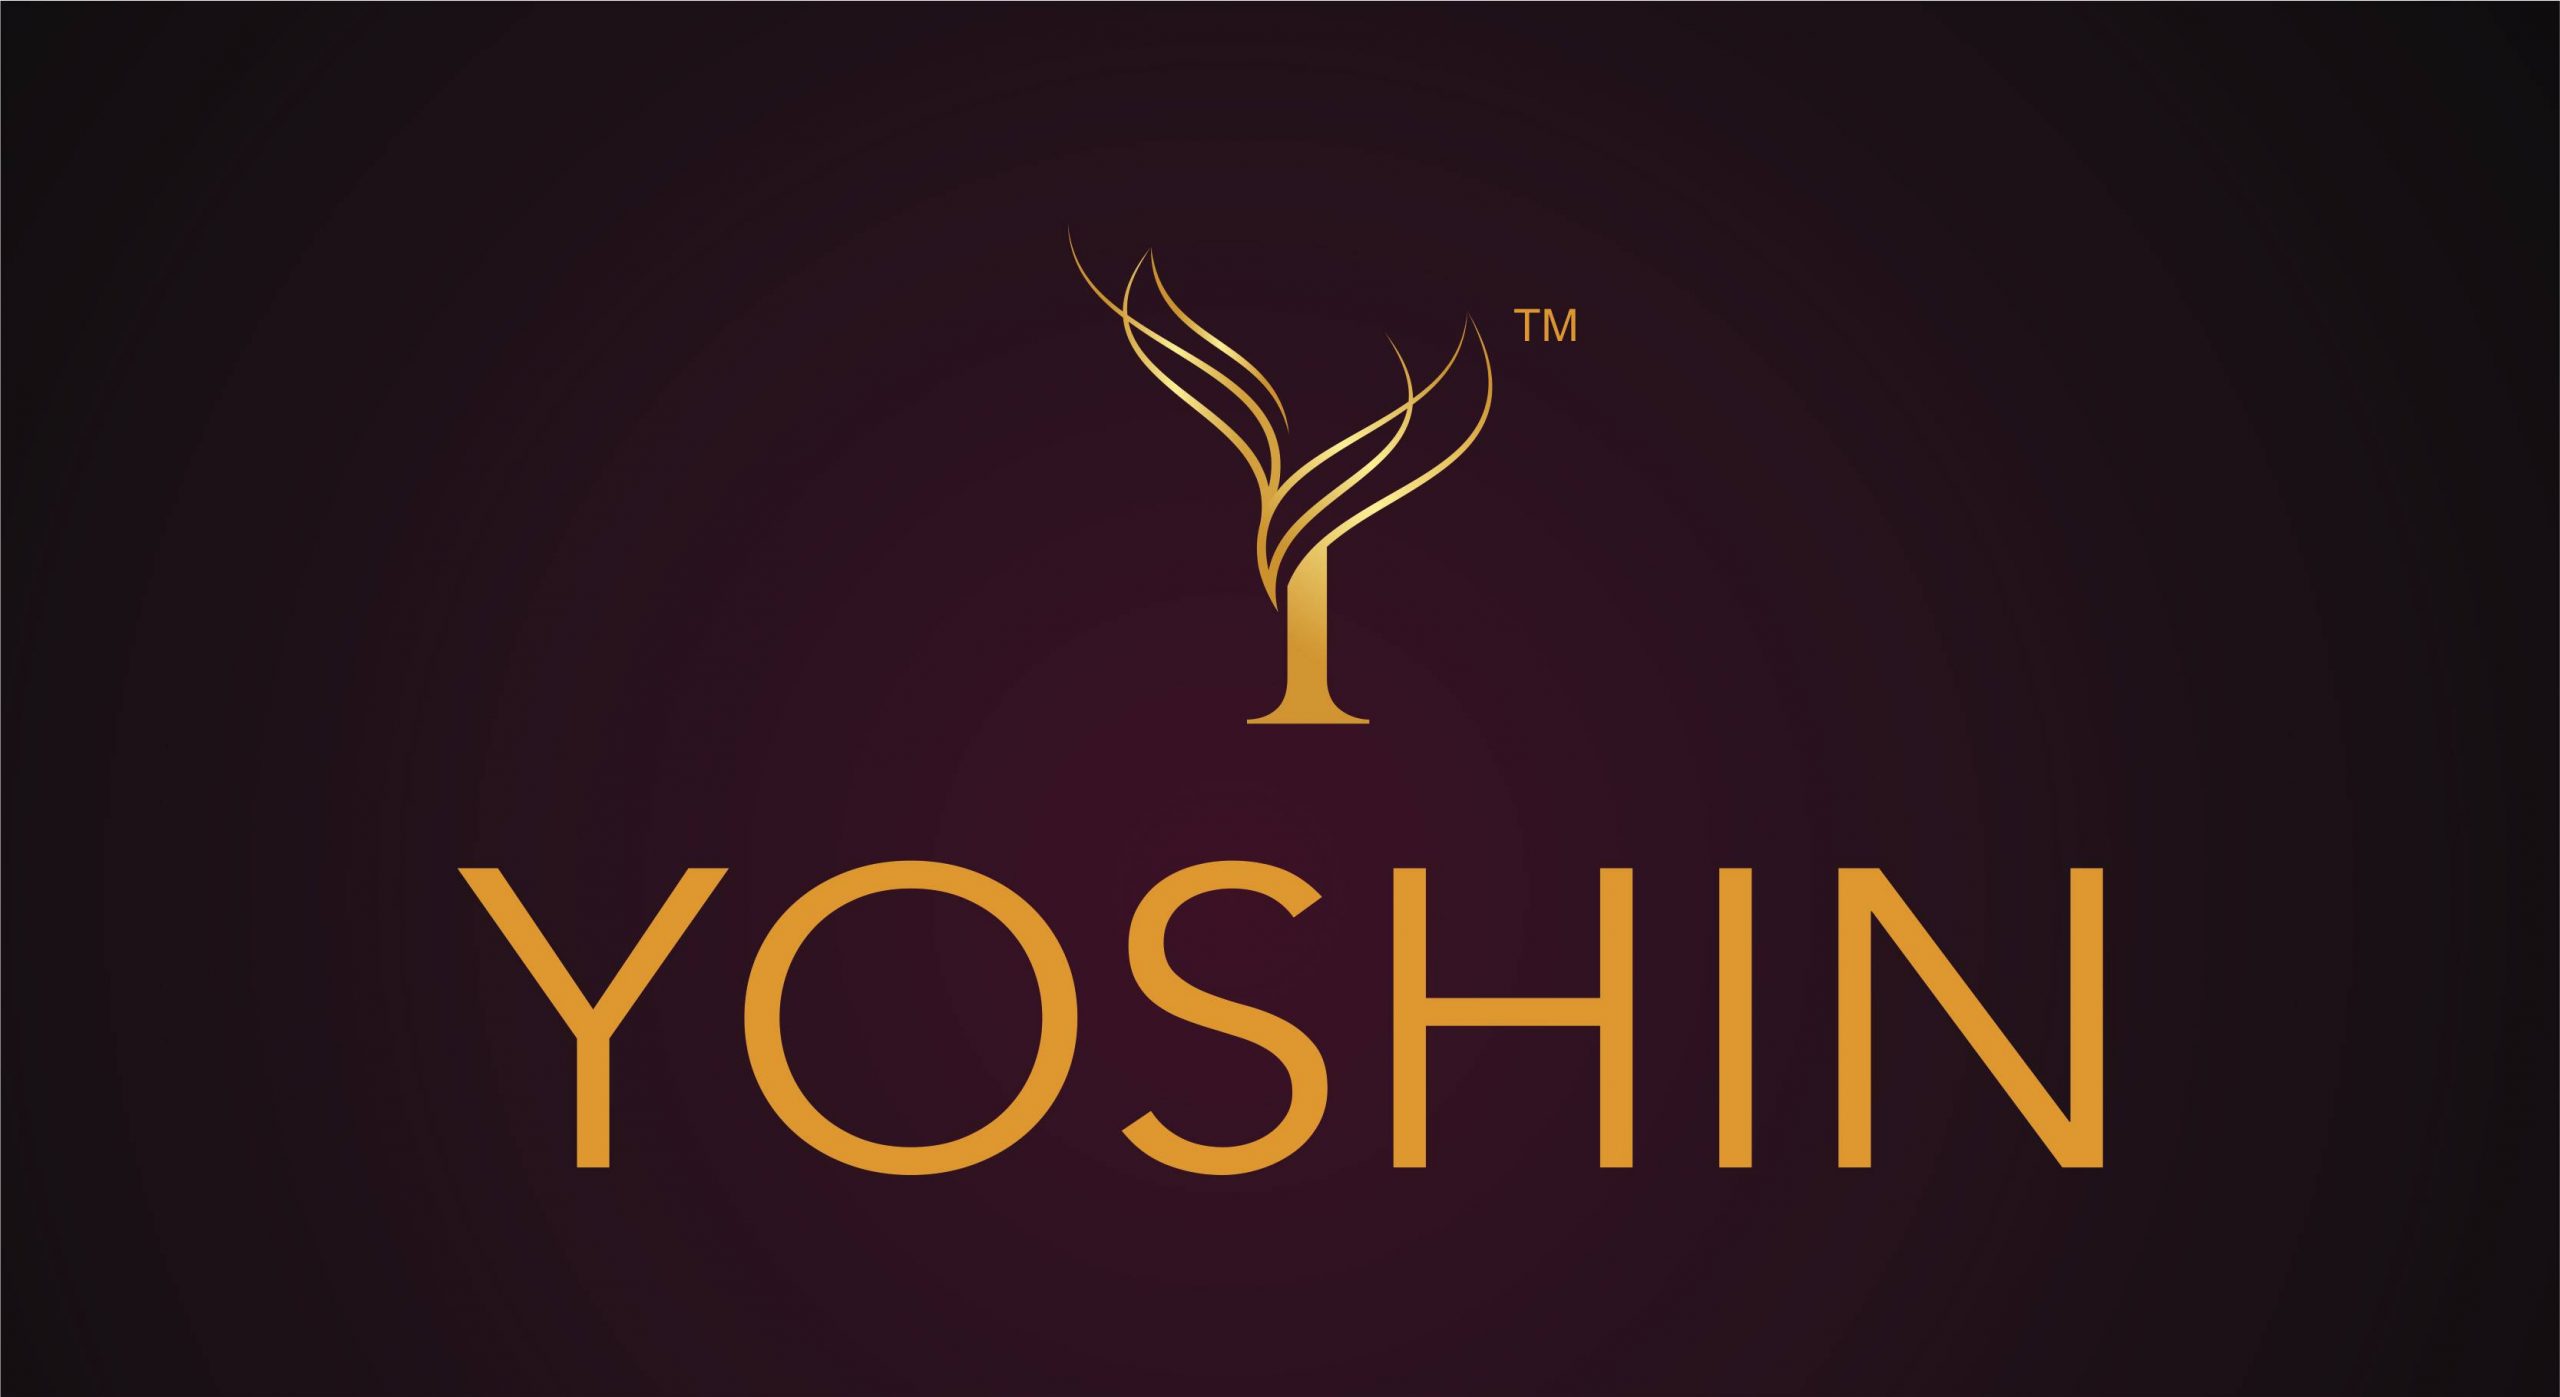 Yoshin | The Golden Tree